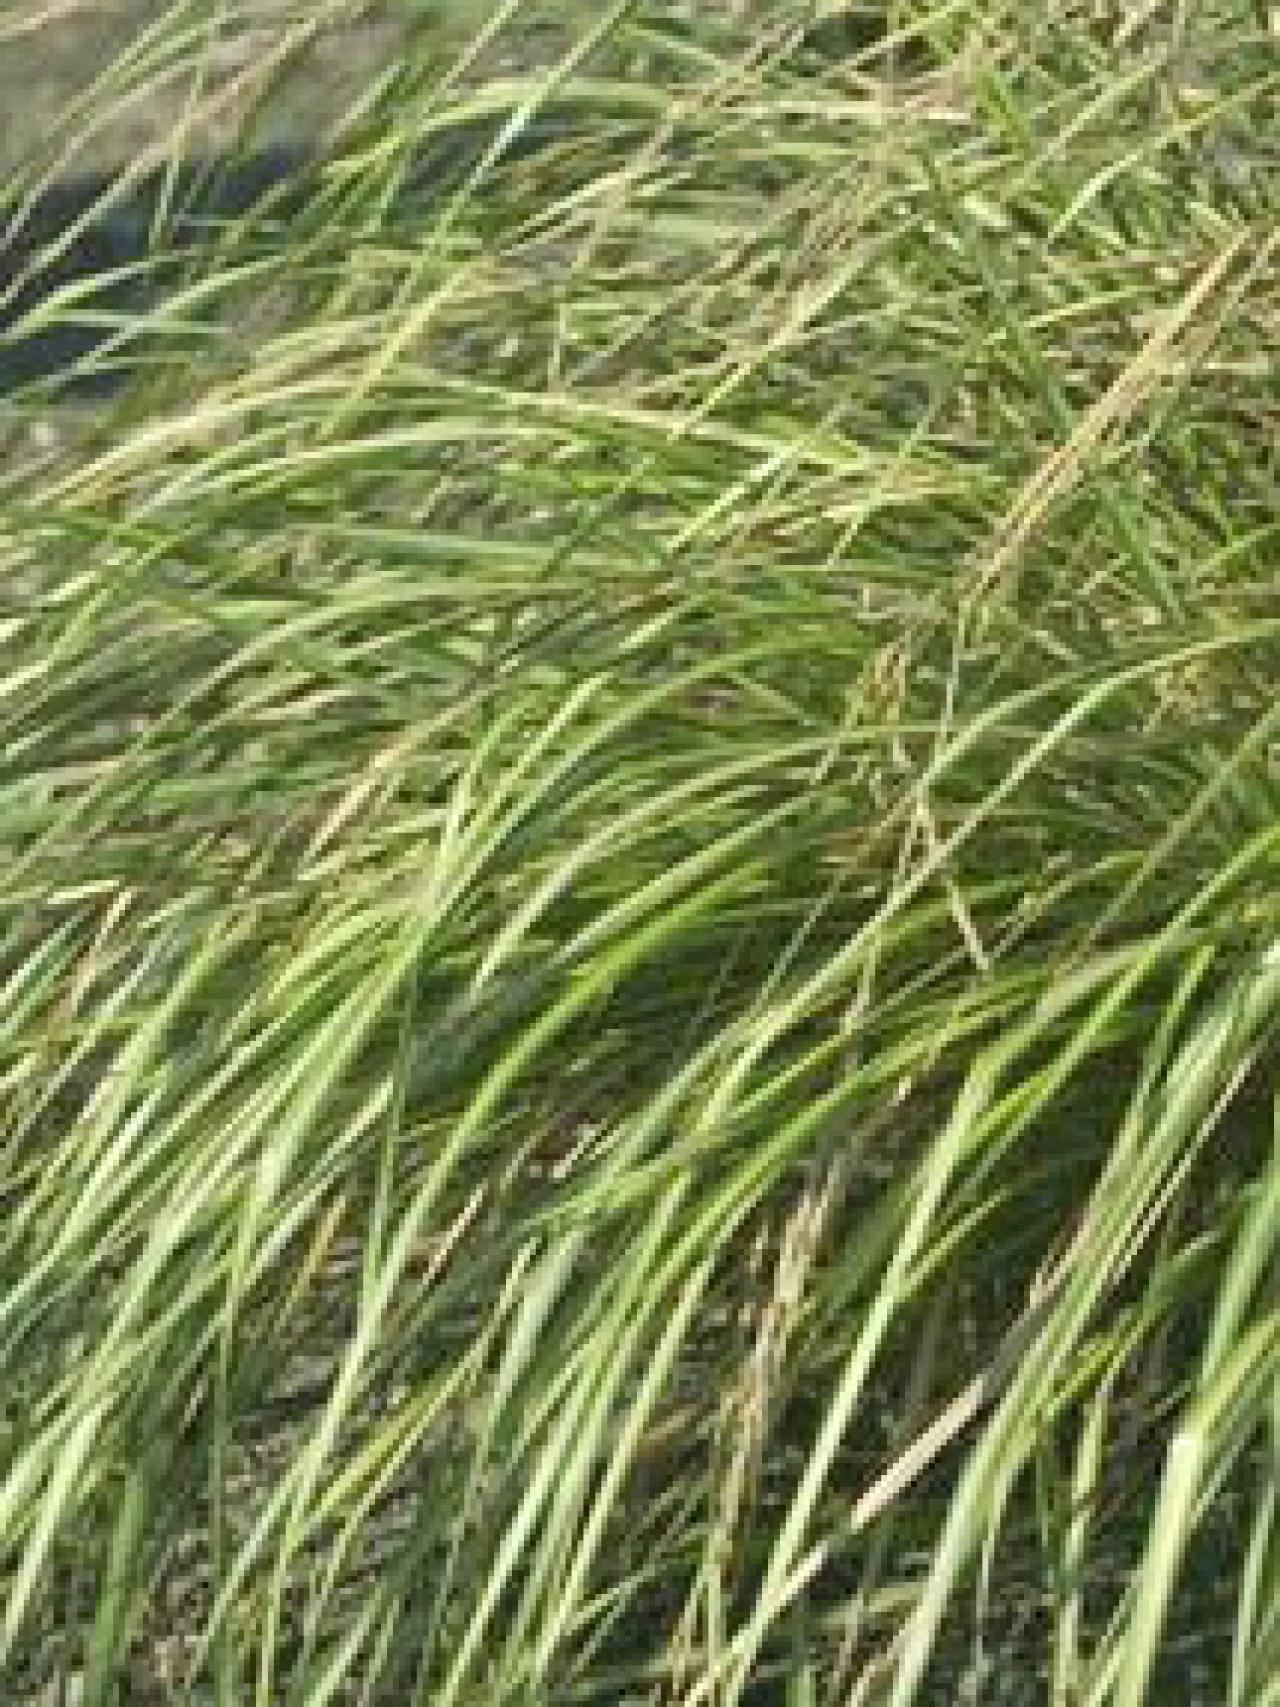 Types of Ornamental Grasses | HGTV